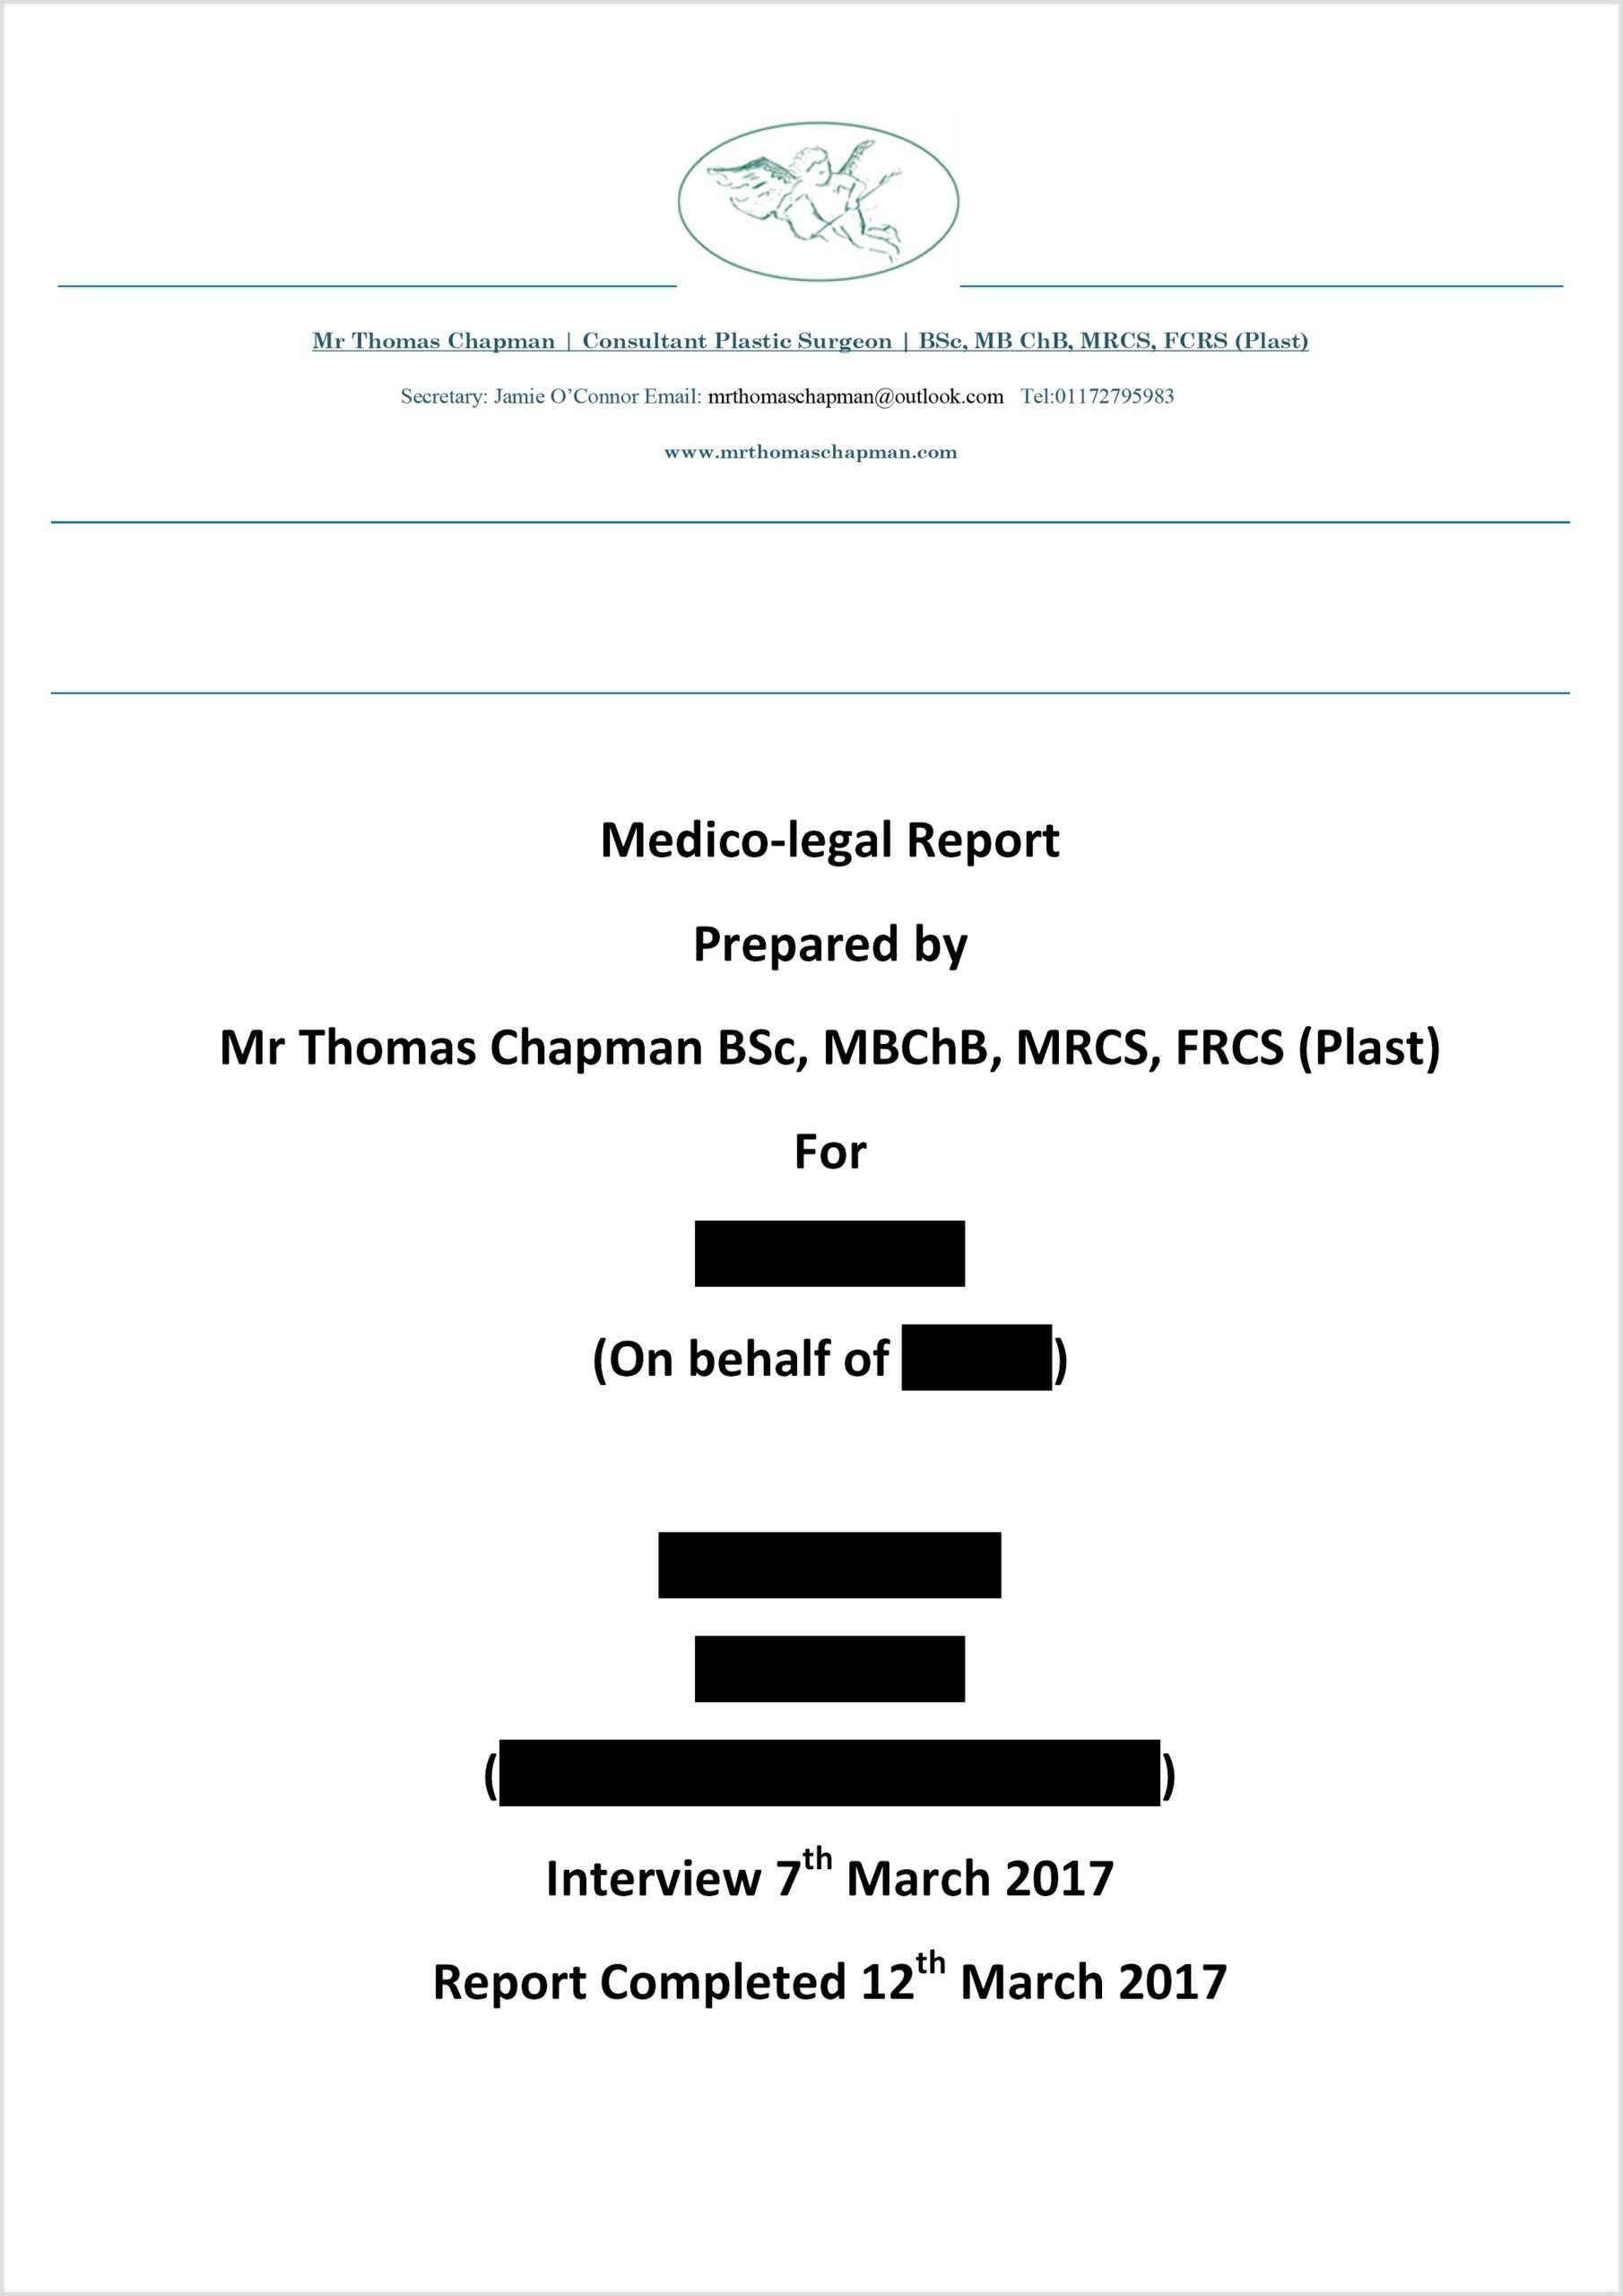 Medicolegal Reporting - Mr Thomas Chapman Intended For Medical Legal Report Template